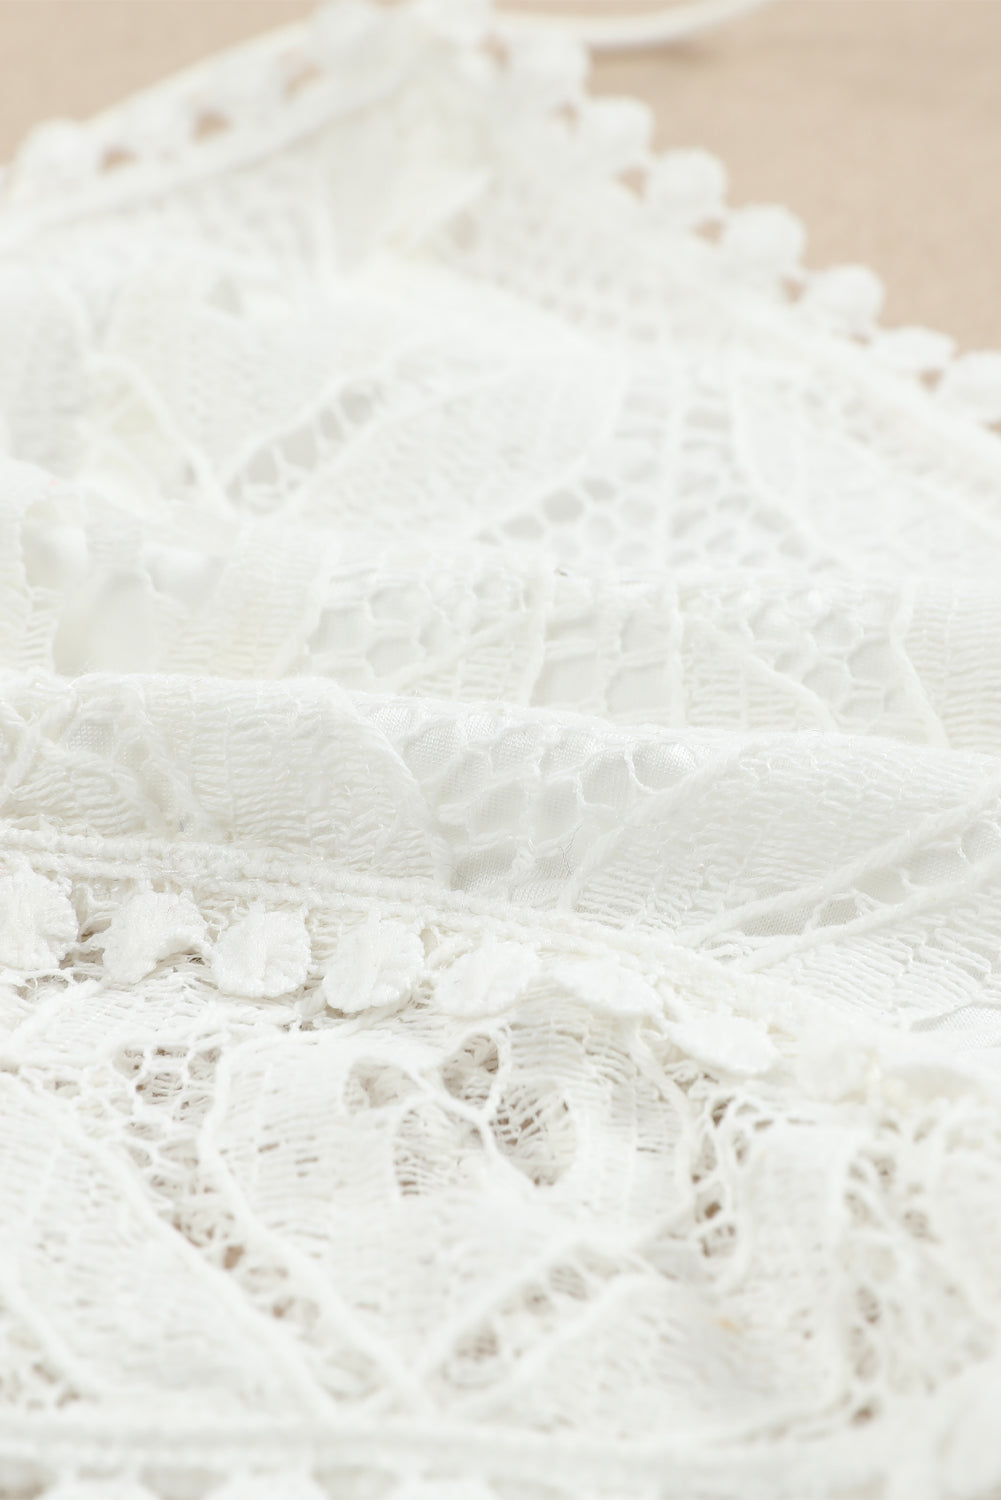 White Crochet Lace Dotty Trim Smocking Bralette Tank Tops JT's Designer Fashion